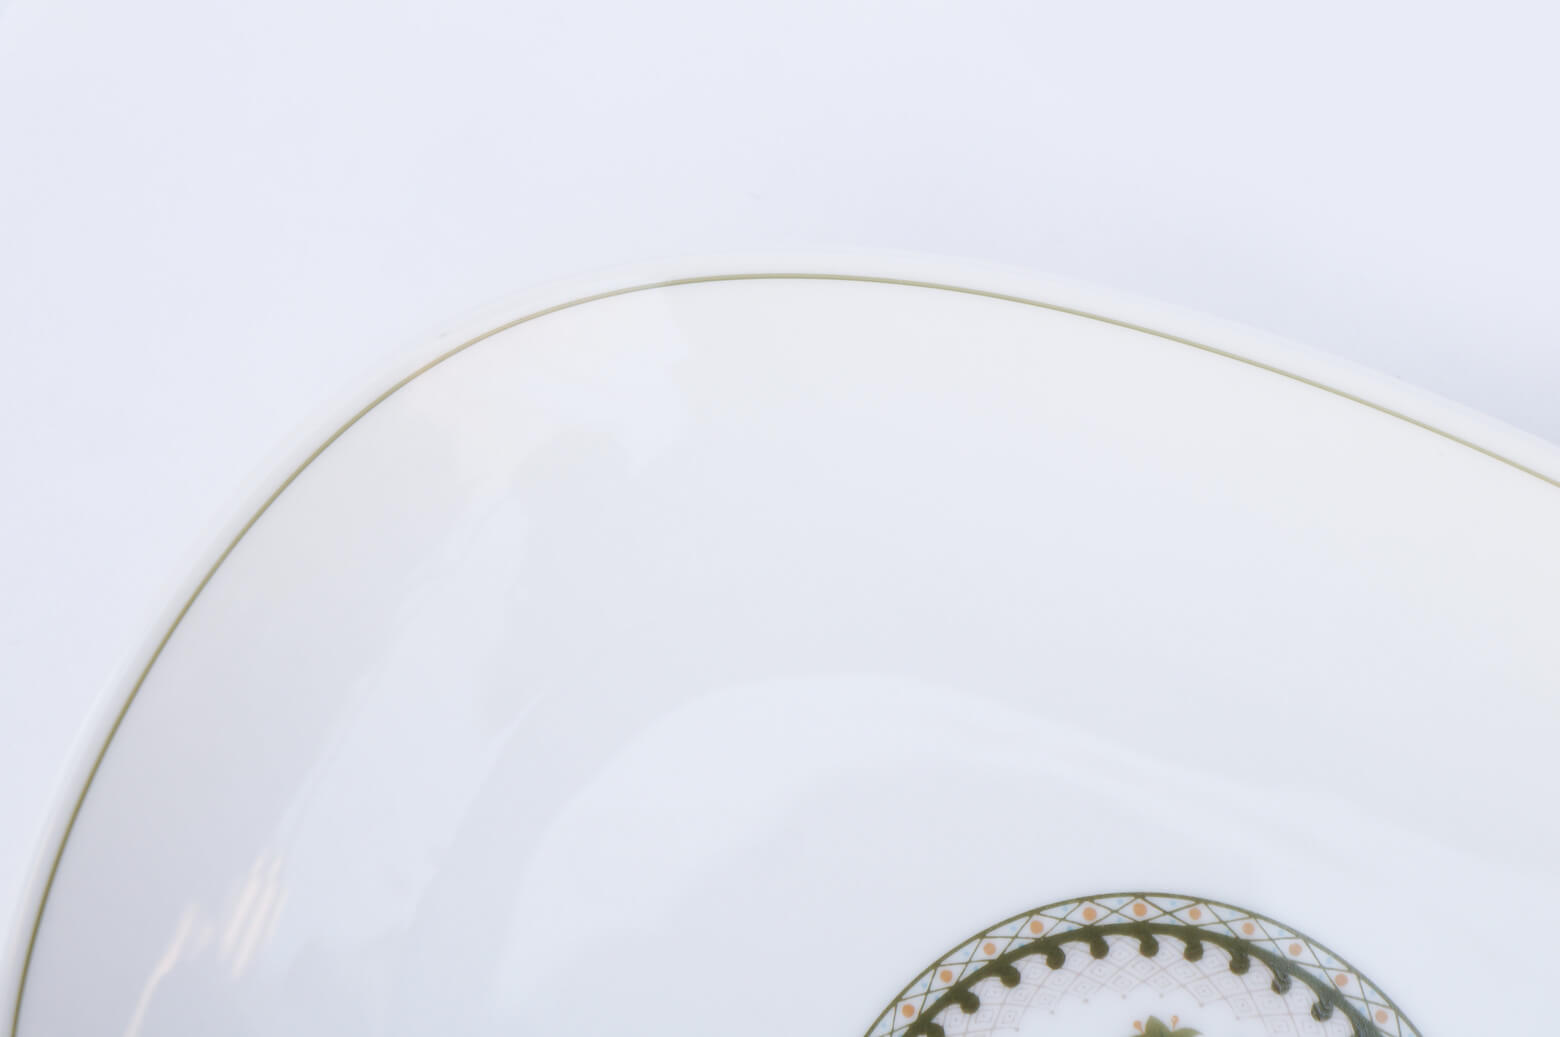 Vintage Noritake Oval Plate Hermitage U.S. Pattern Tableware/ノリタケ オーバル プレート エルミタージュ テーブルウェア レトロ ヴィンテージ食器 Mサイズ